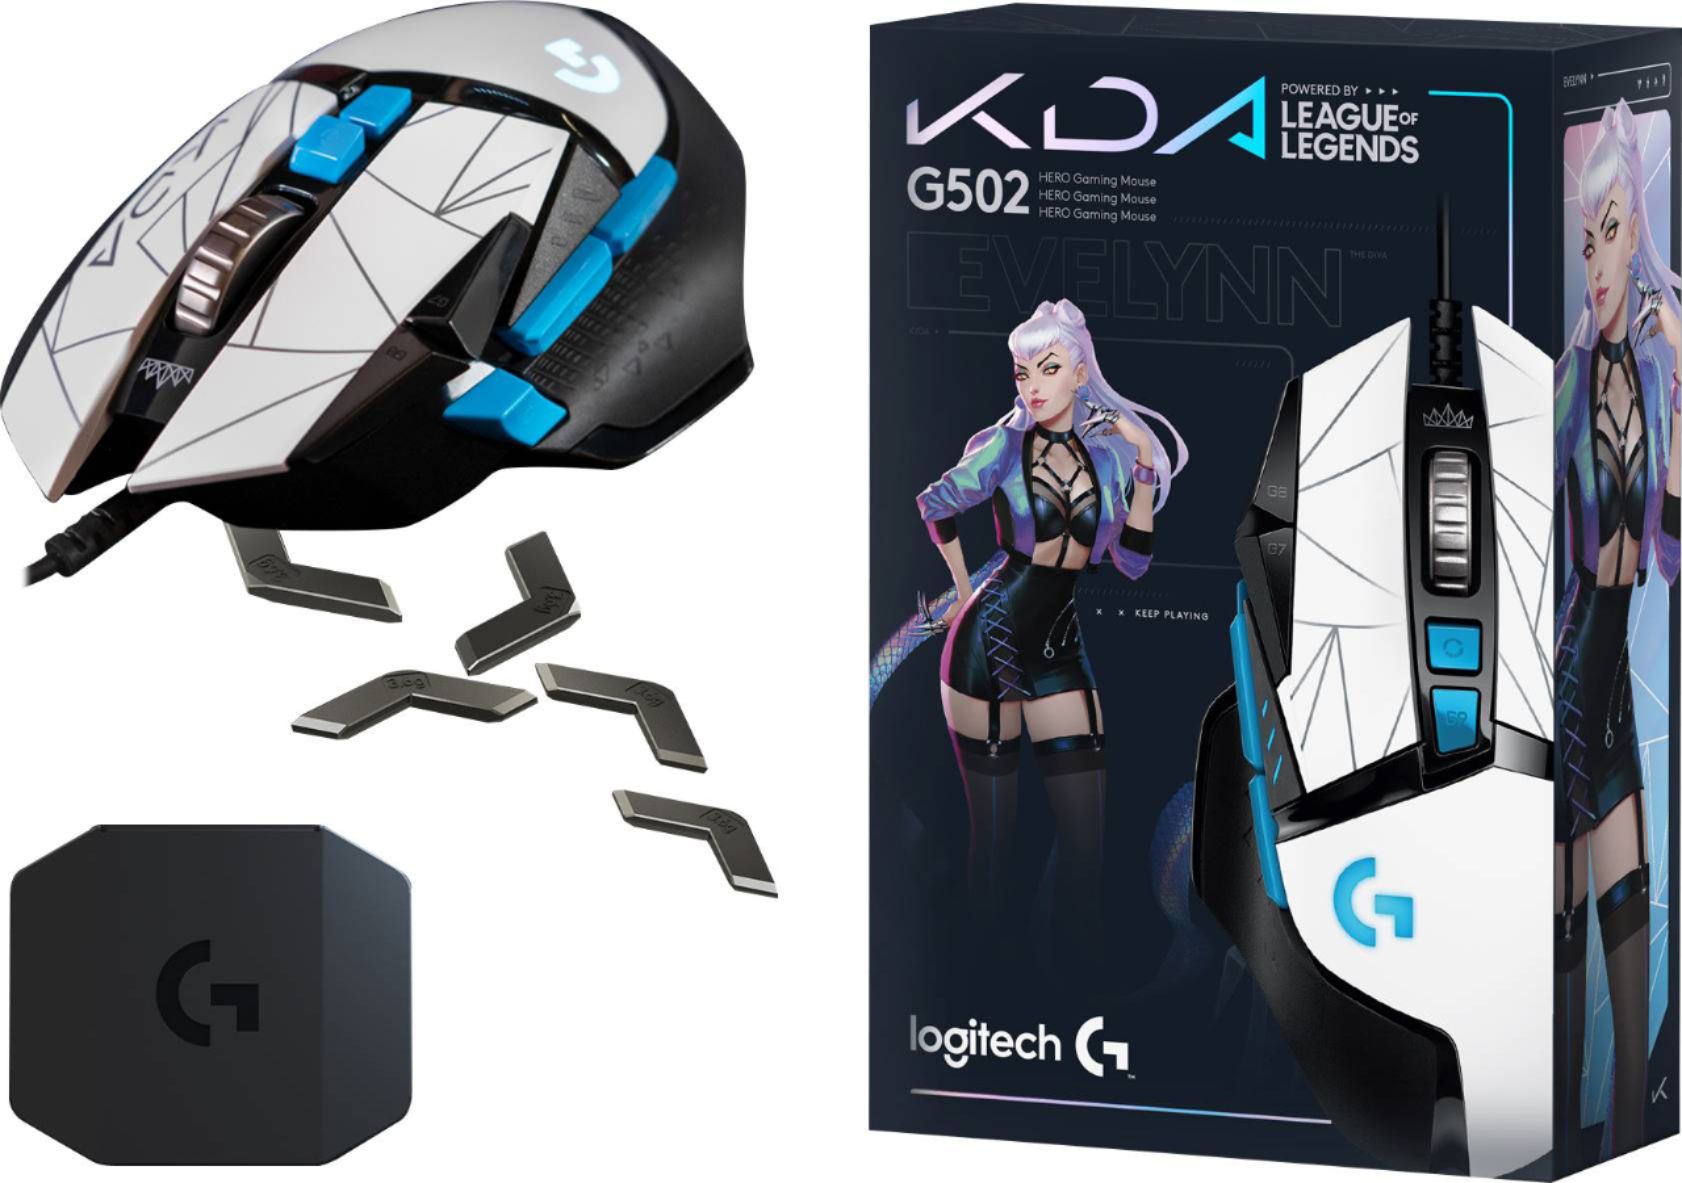 Logitech G502 Hero K/DA High Performance Gaming Mouse - Hero 25K Sensor,  16.8 Million Color LIGHTSYNC RGB, 11 Programmable Buttons, On-Board Memory  